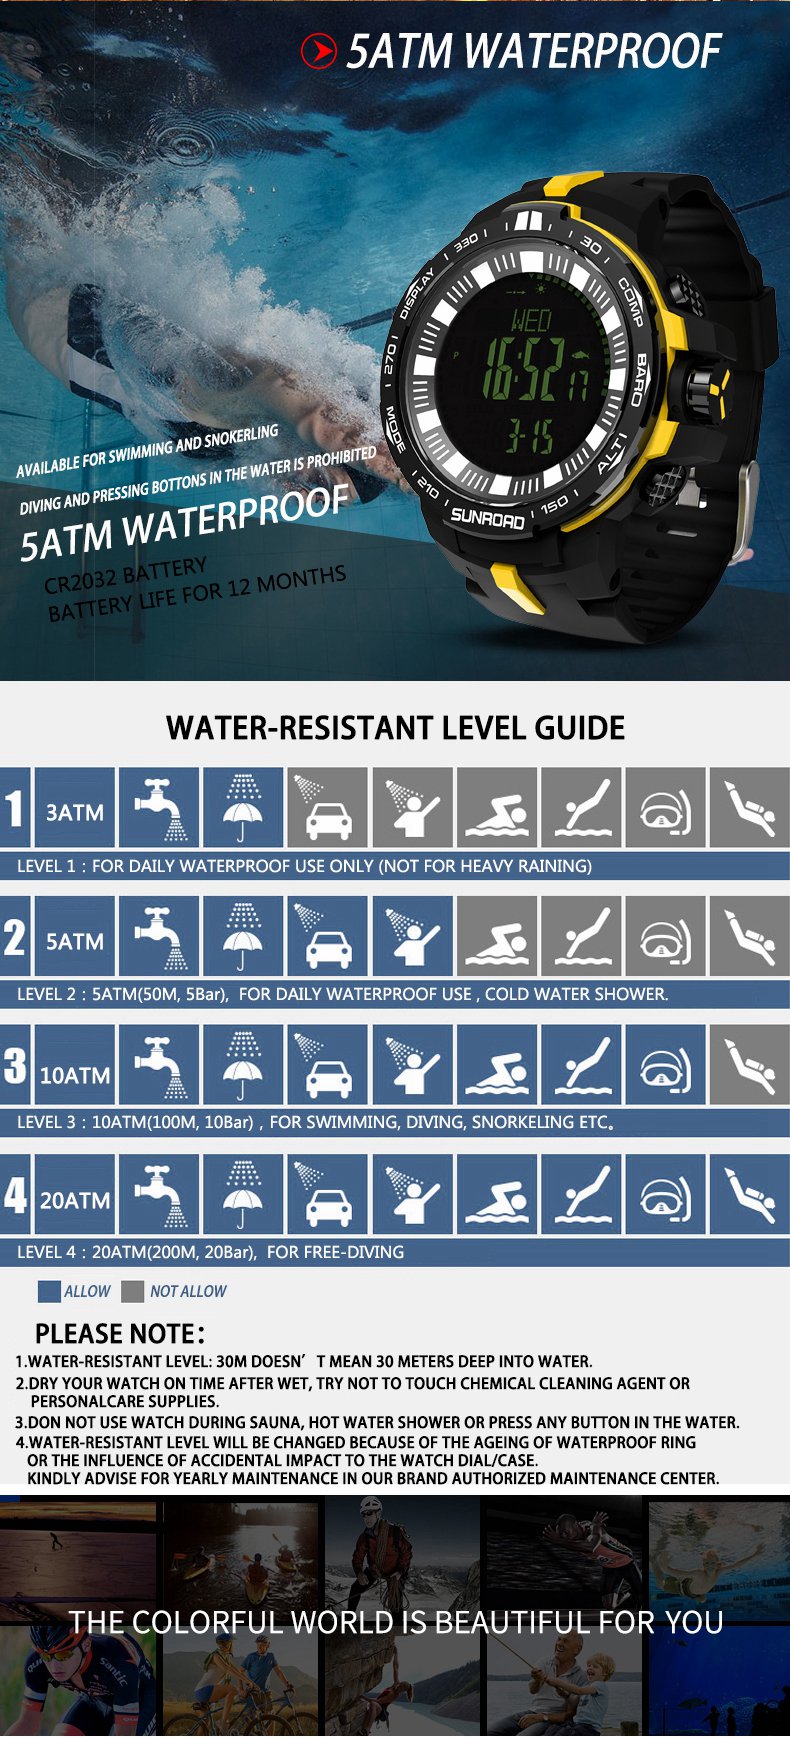 SUNROAD-FR861-Digital-Watch-Fishing-Hiking-Compass-Barometer-Waterproof-Sport-Outdoor-Men-Watch-1275600